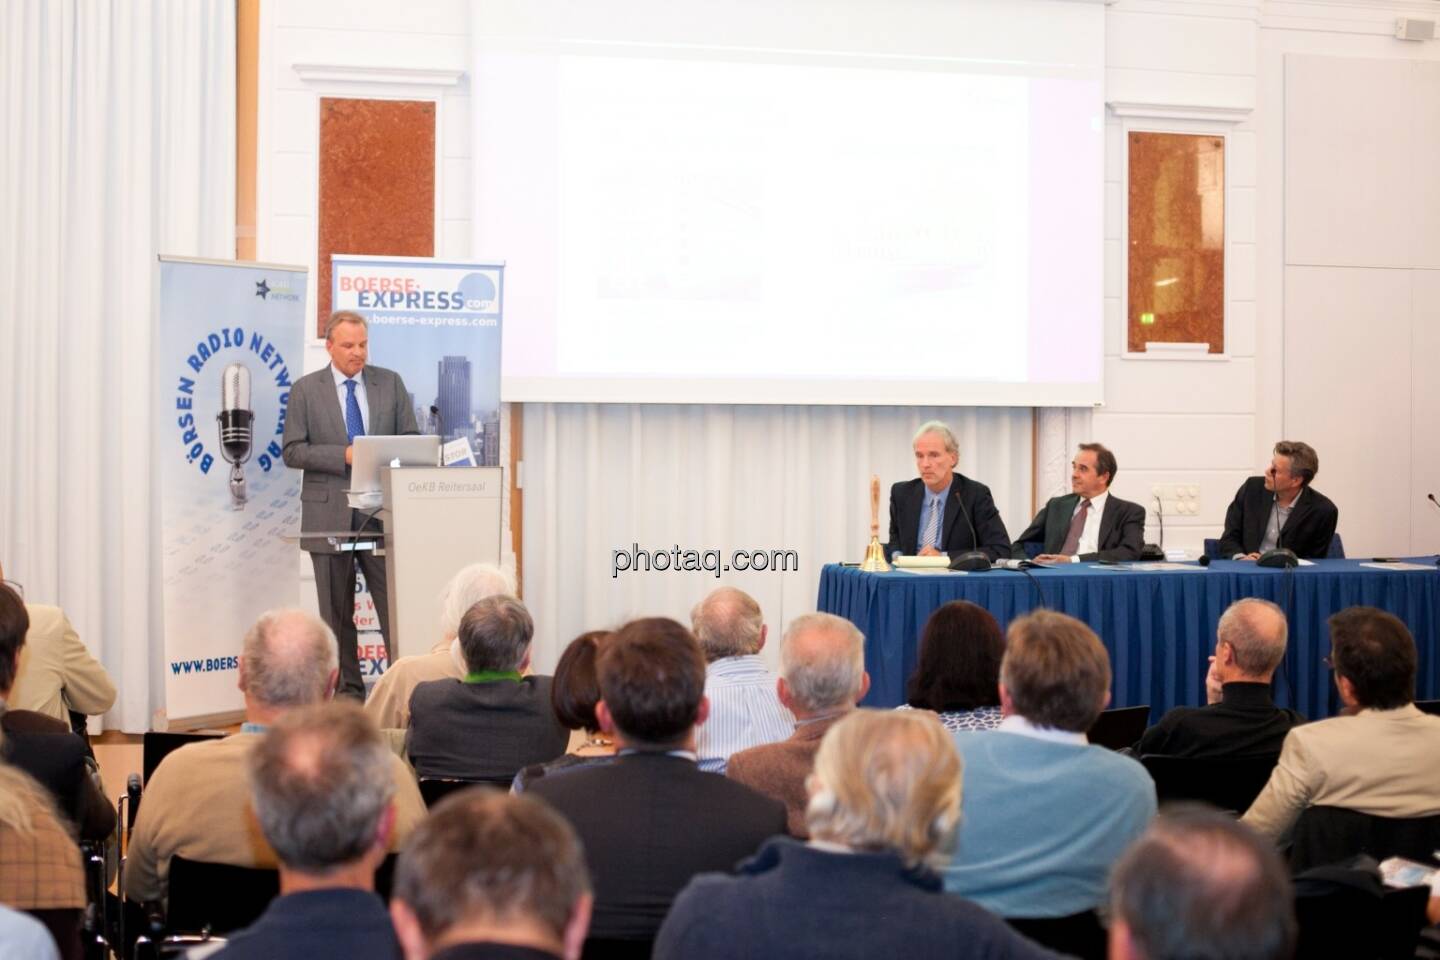 Andreas Feuerstein (S Immo), Christian Drastil (BSN), Wolfgang Matejka (Matejka & Partner), Robert Gillinger (Börse Express)